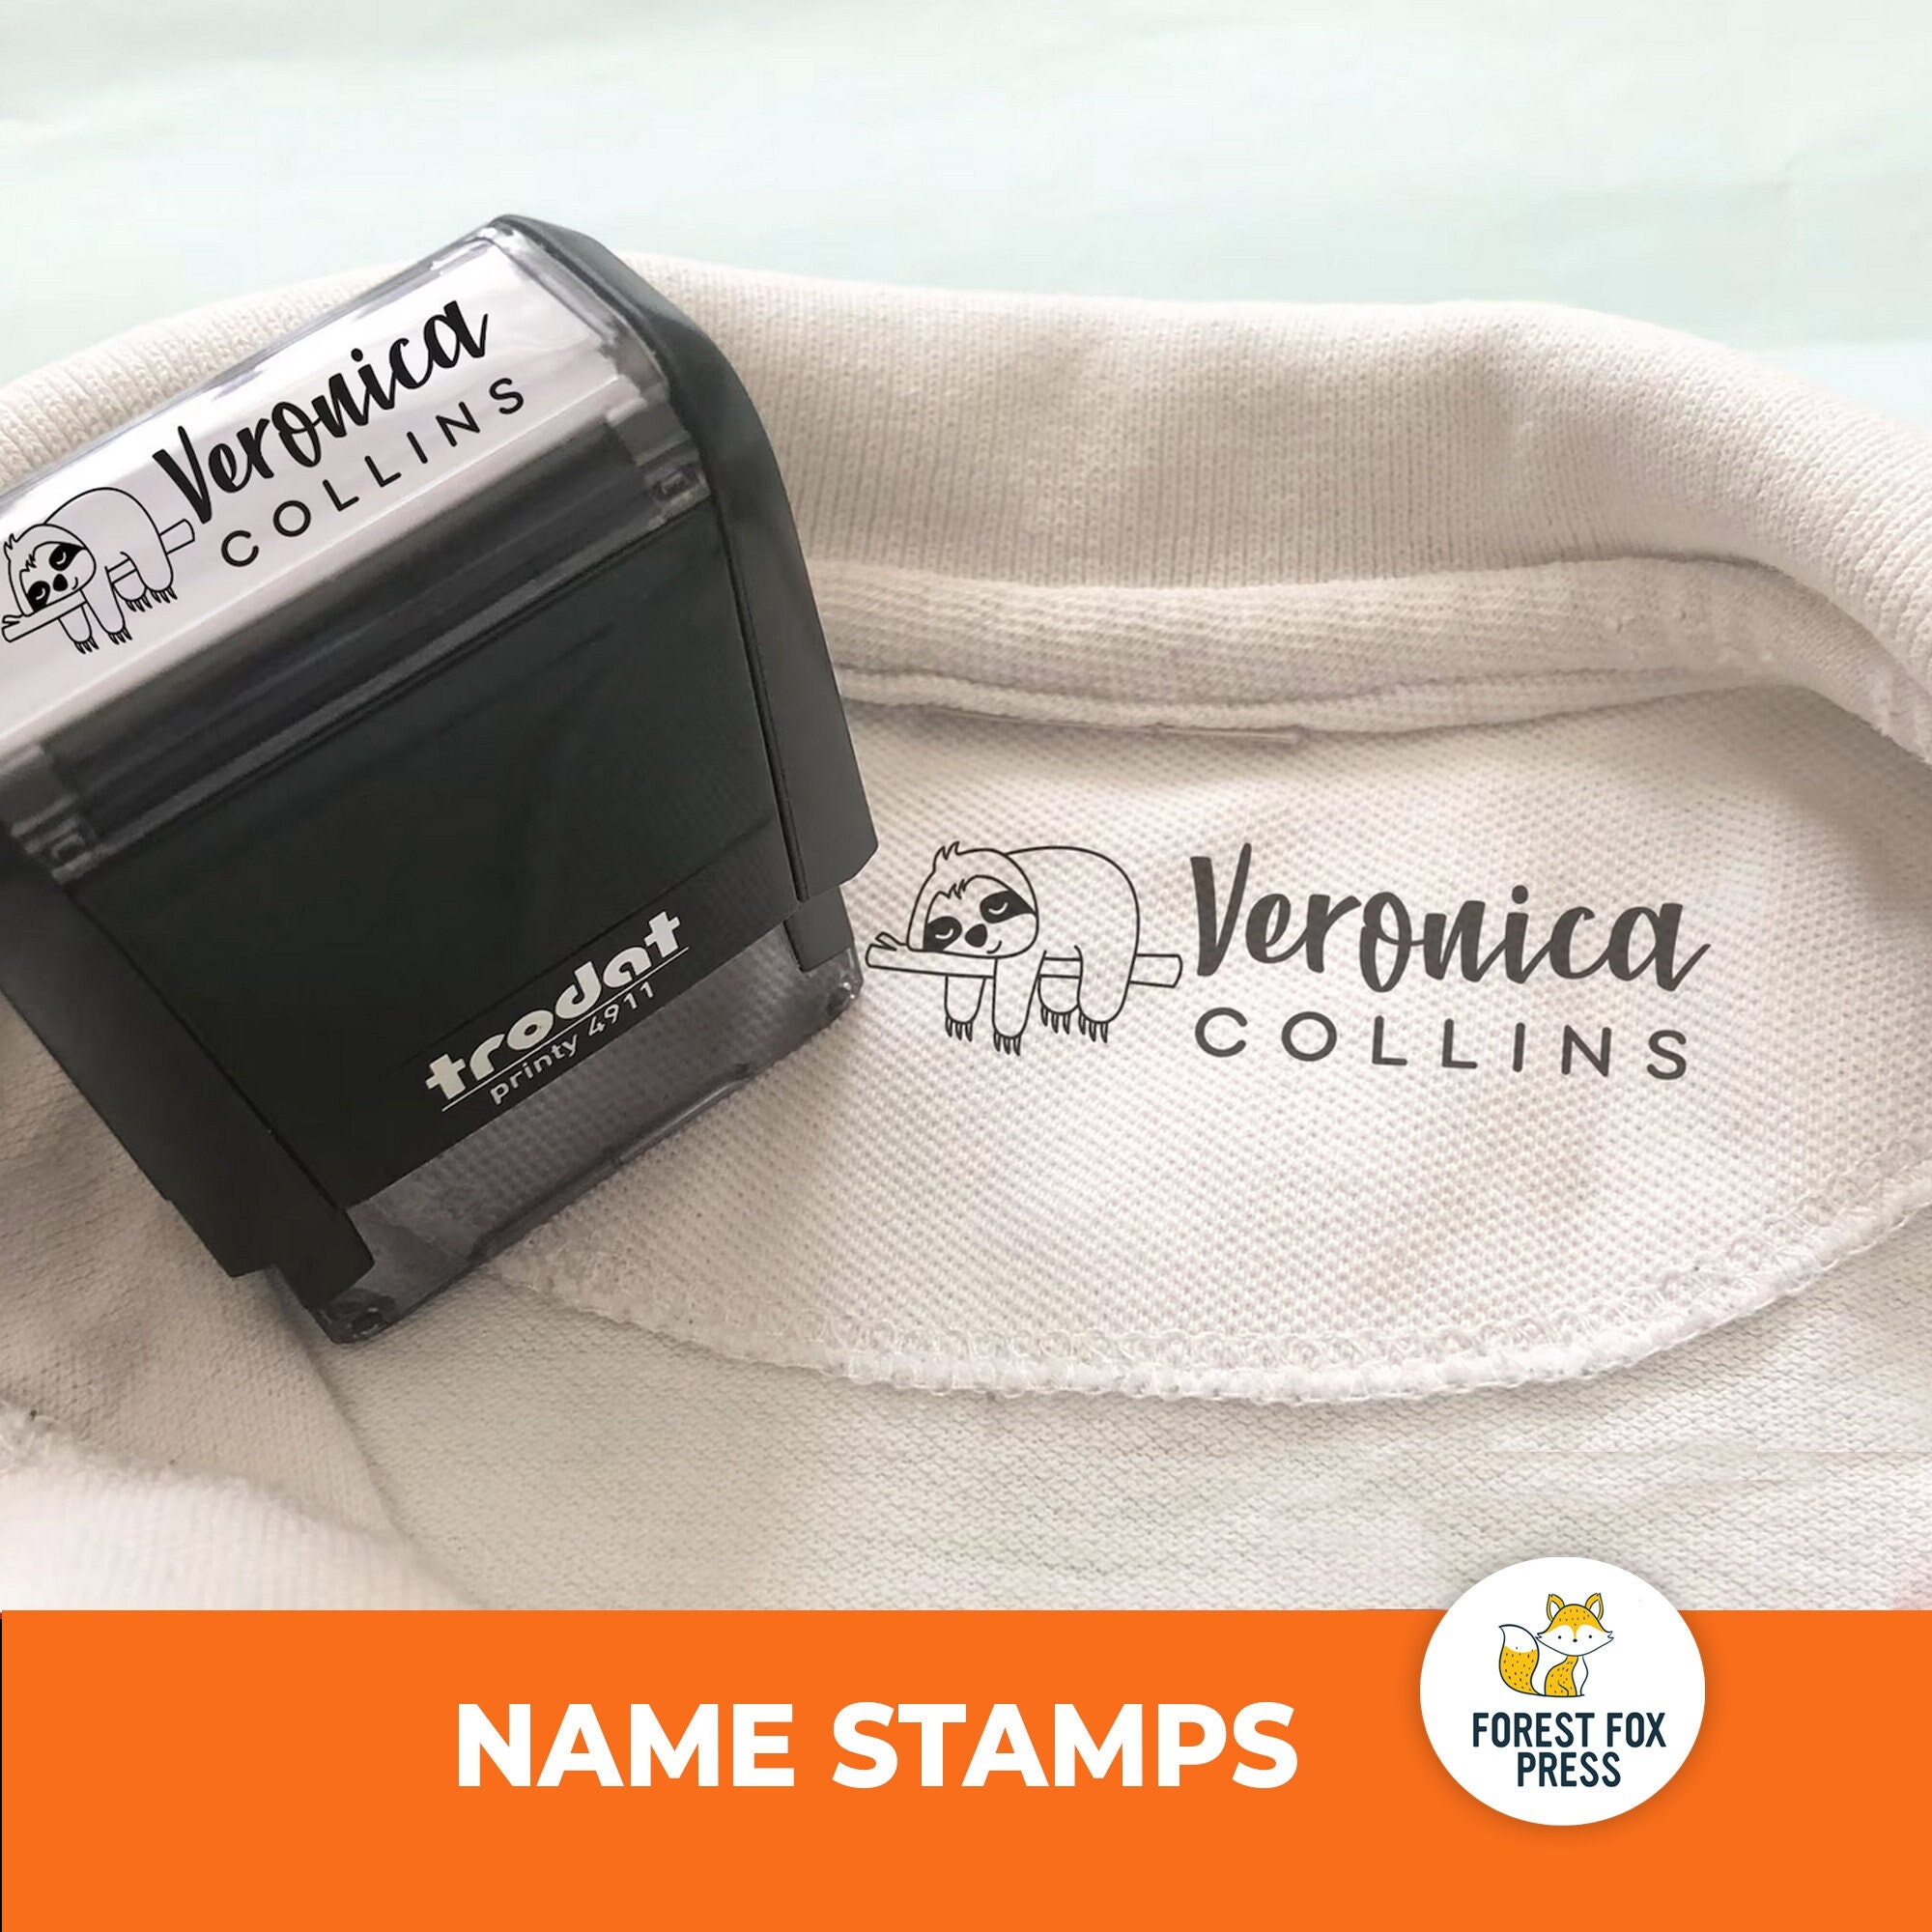 Custom Name Stamp, Name Stamp for Clothing Kids, Personalized Stamps, Clothing Stamp for Kids Clothes, Name Stamps Self Inking Personalized, 32